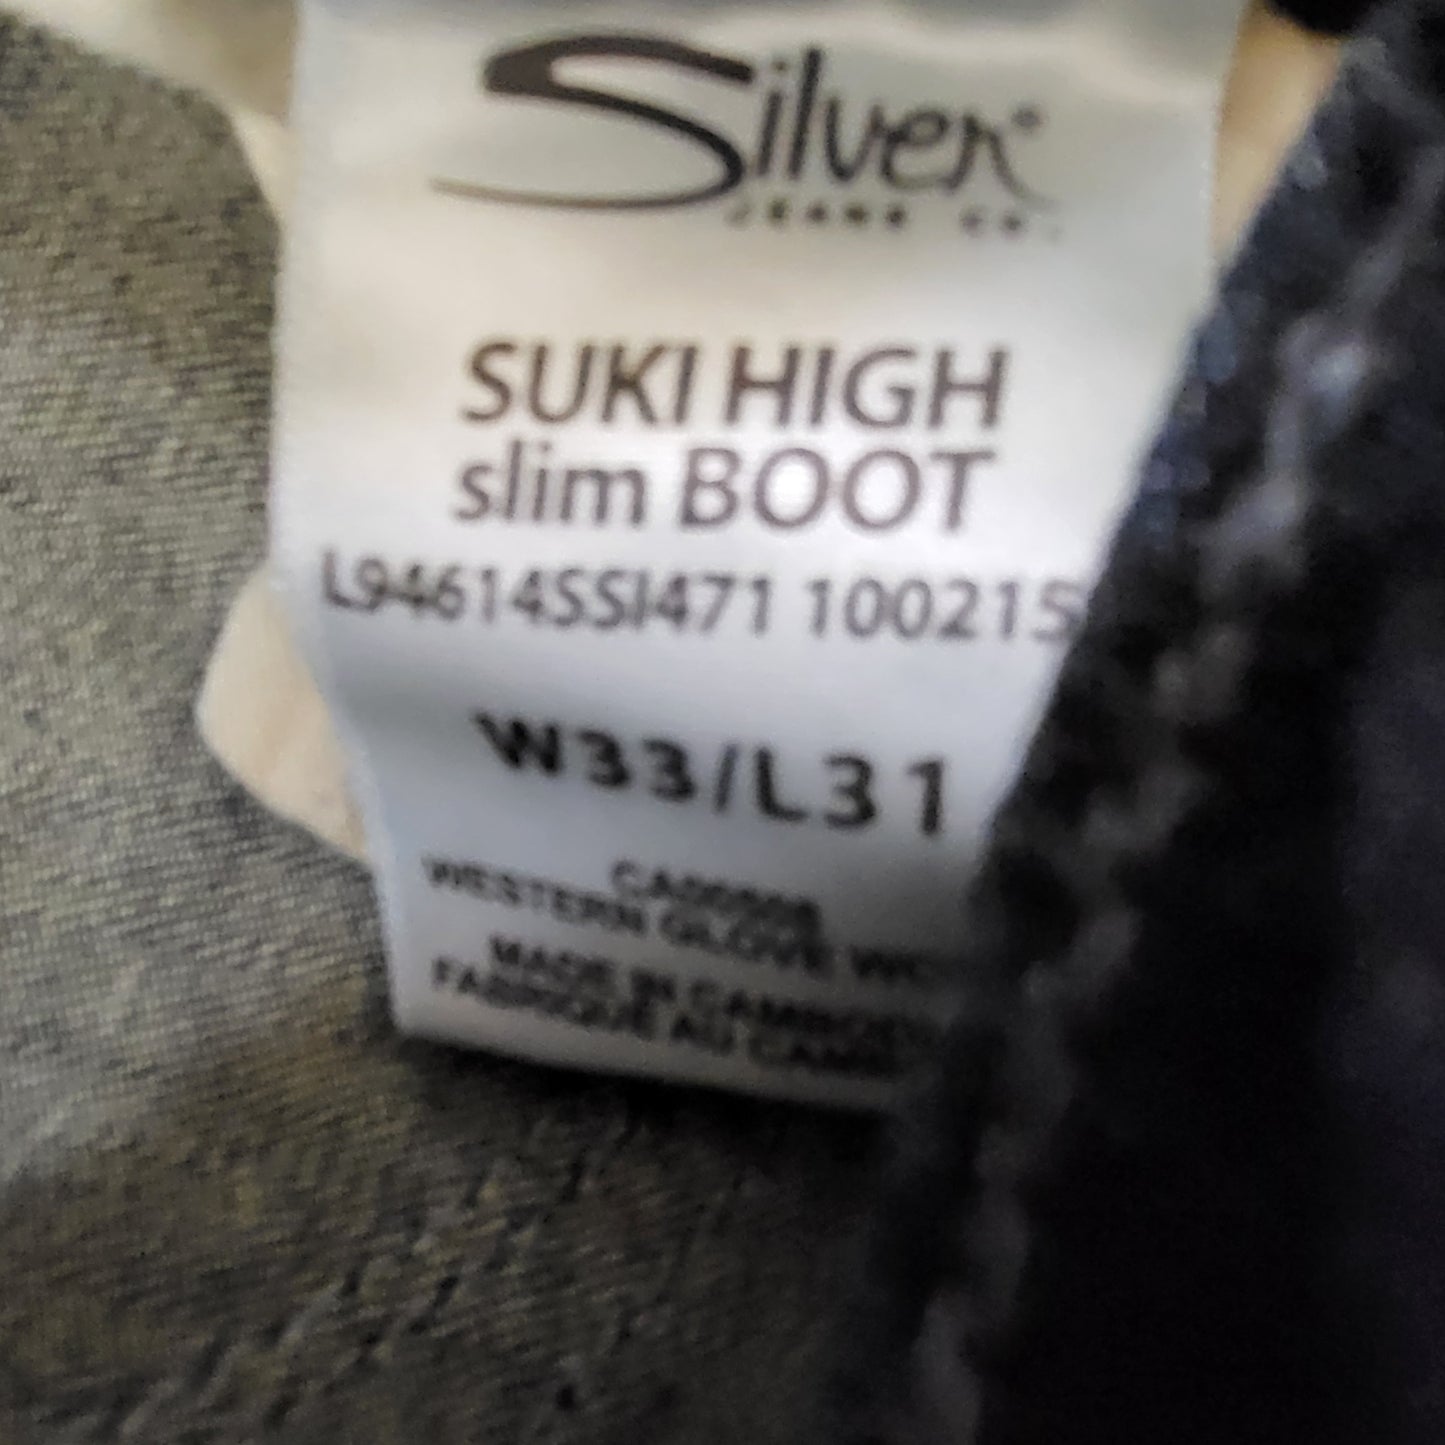 JBAB2 - Silver Jeans high rise slim boot cut Suki jeans, size 33/31